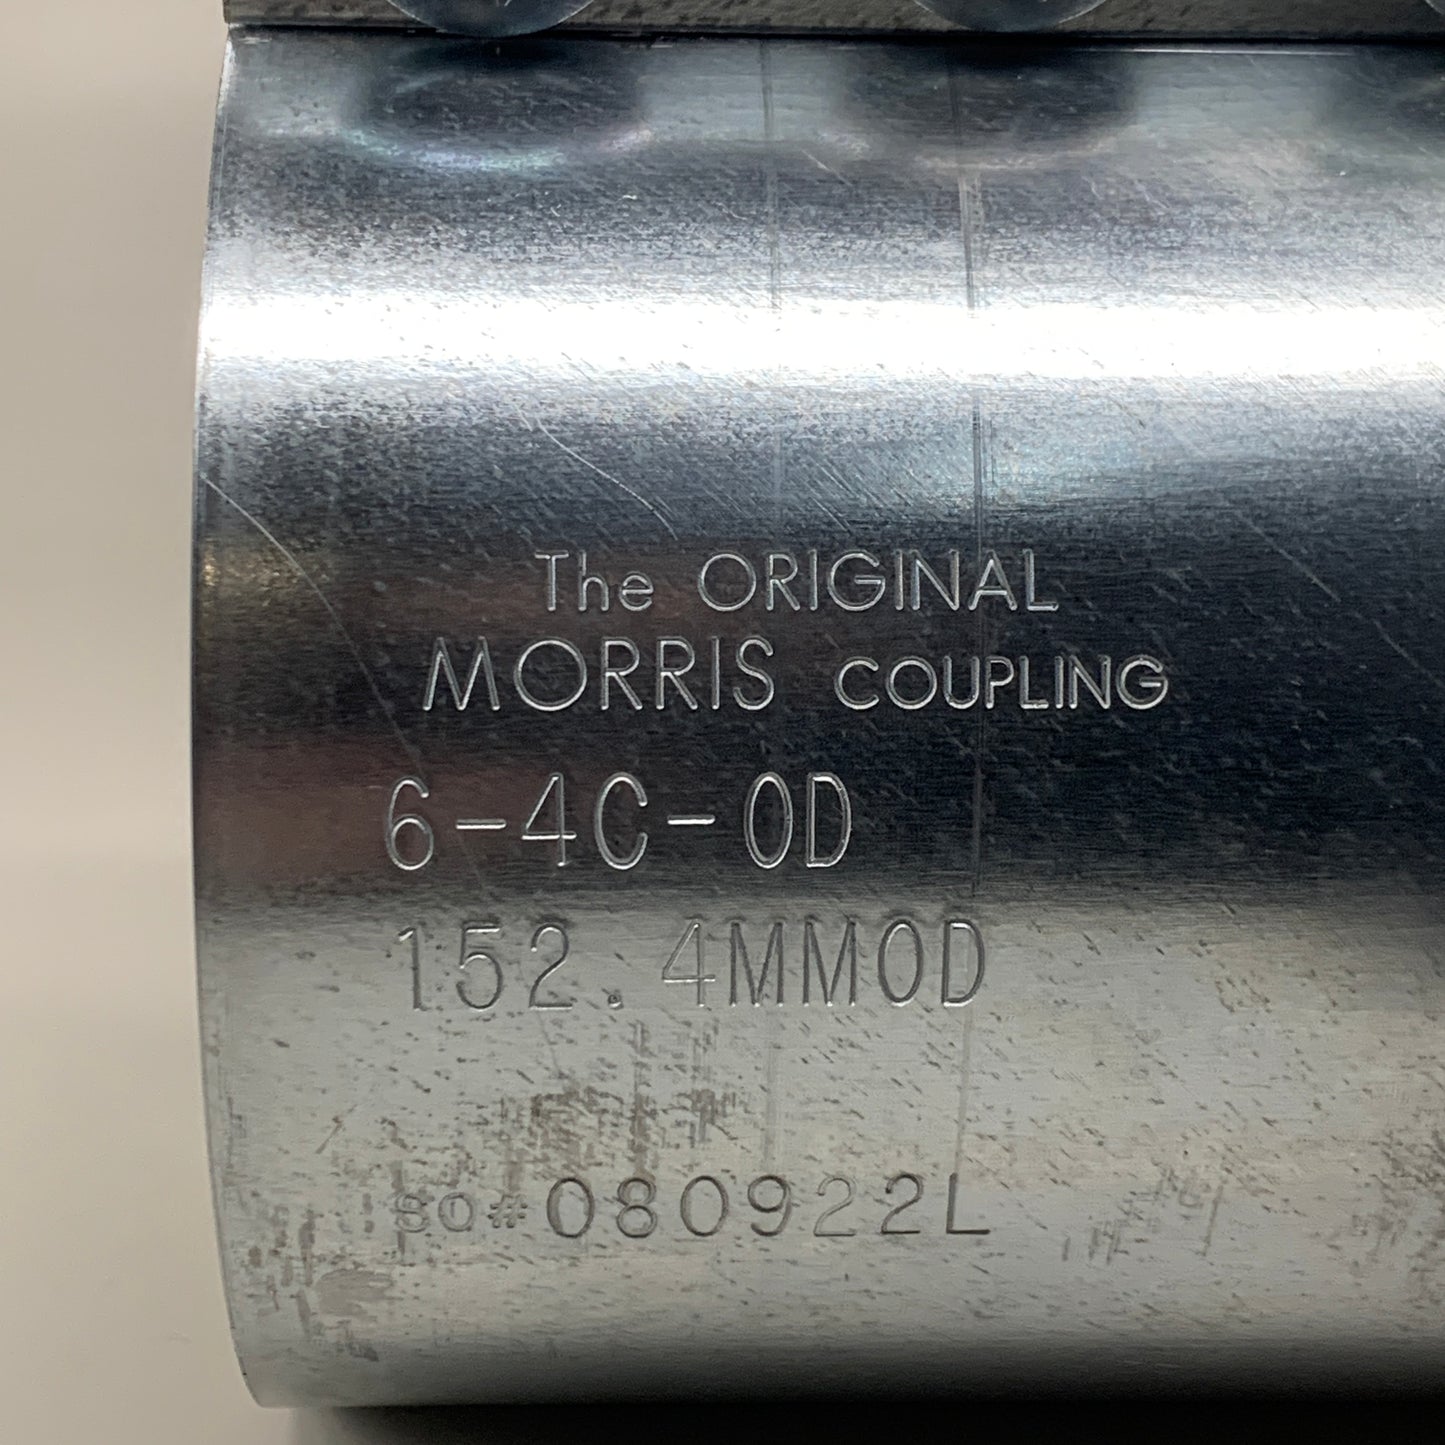 MORRIS Compression Coupling 6" OD Tubing 6-4C-OD (New)